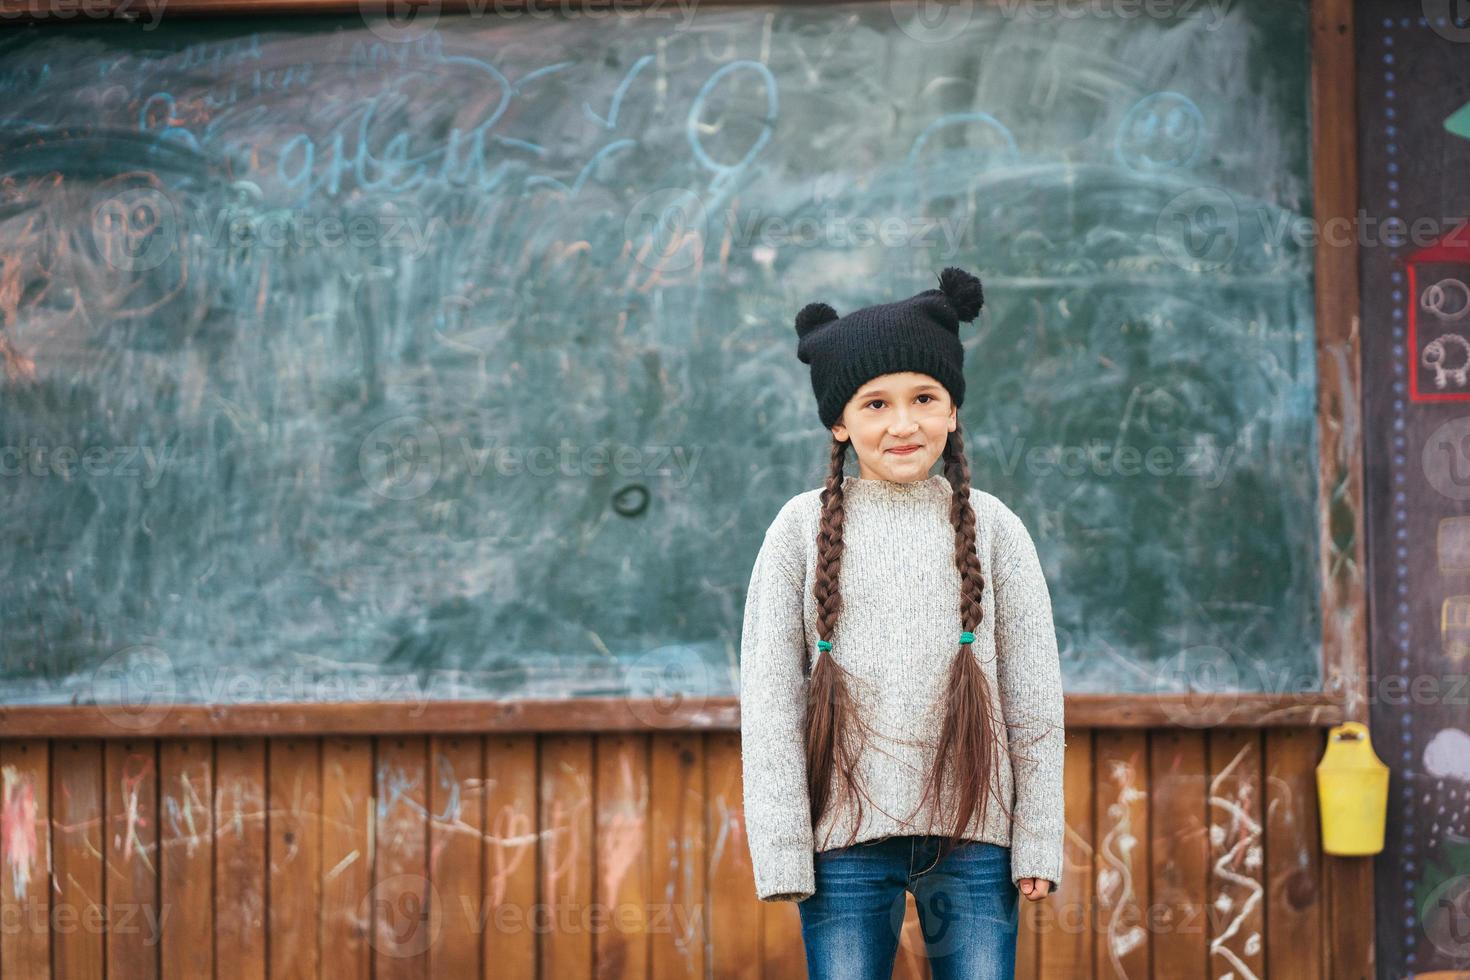 Little girl in a hat posing on the background of the school blackboard photo